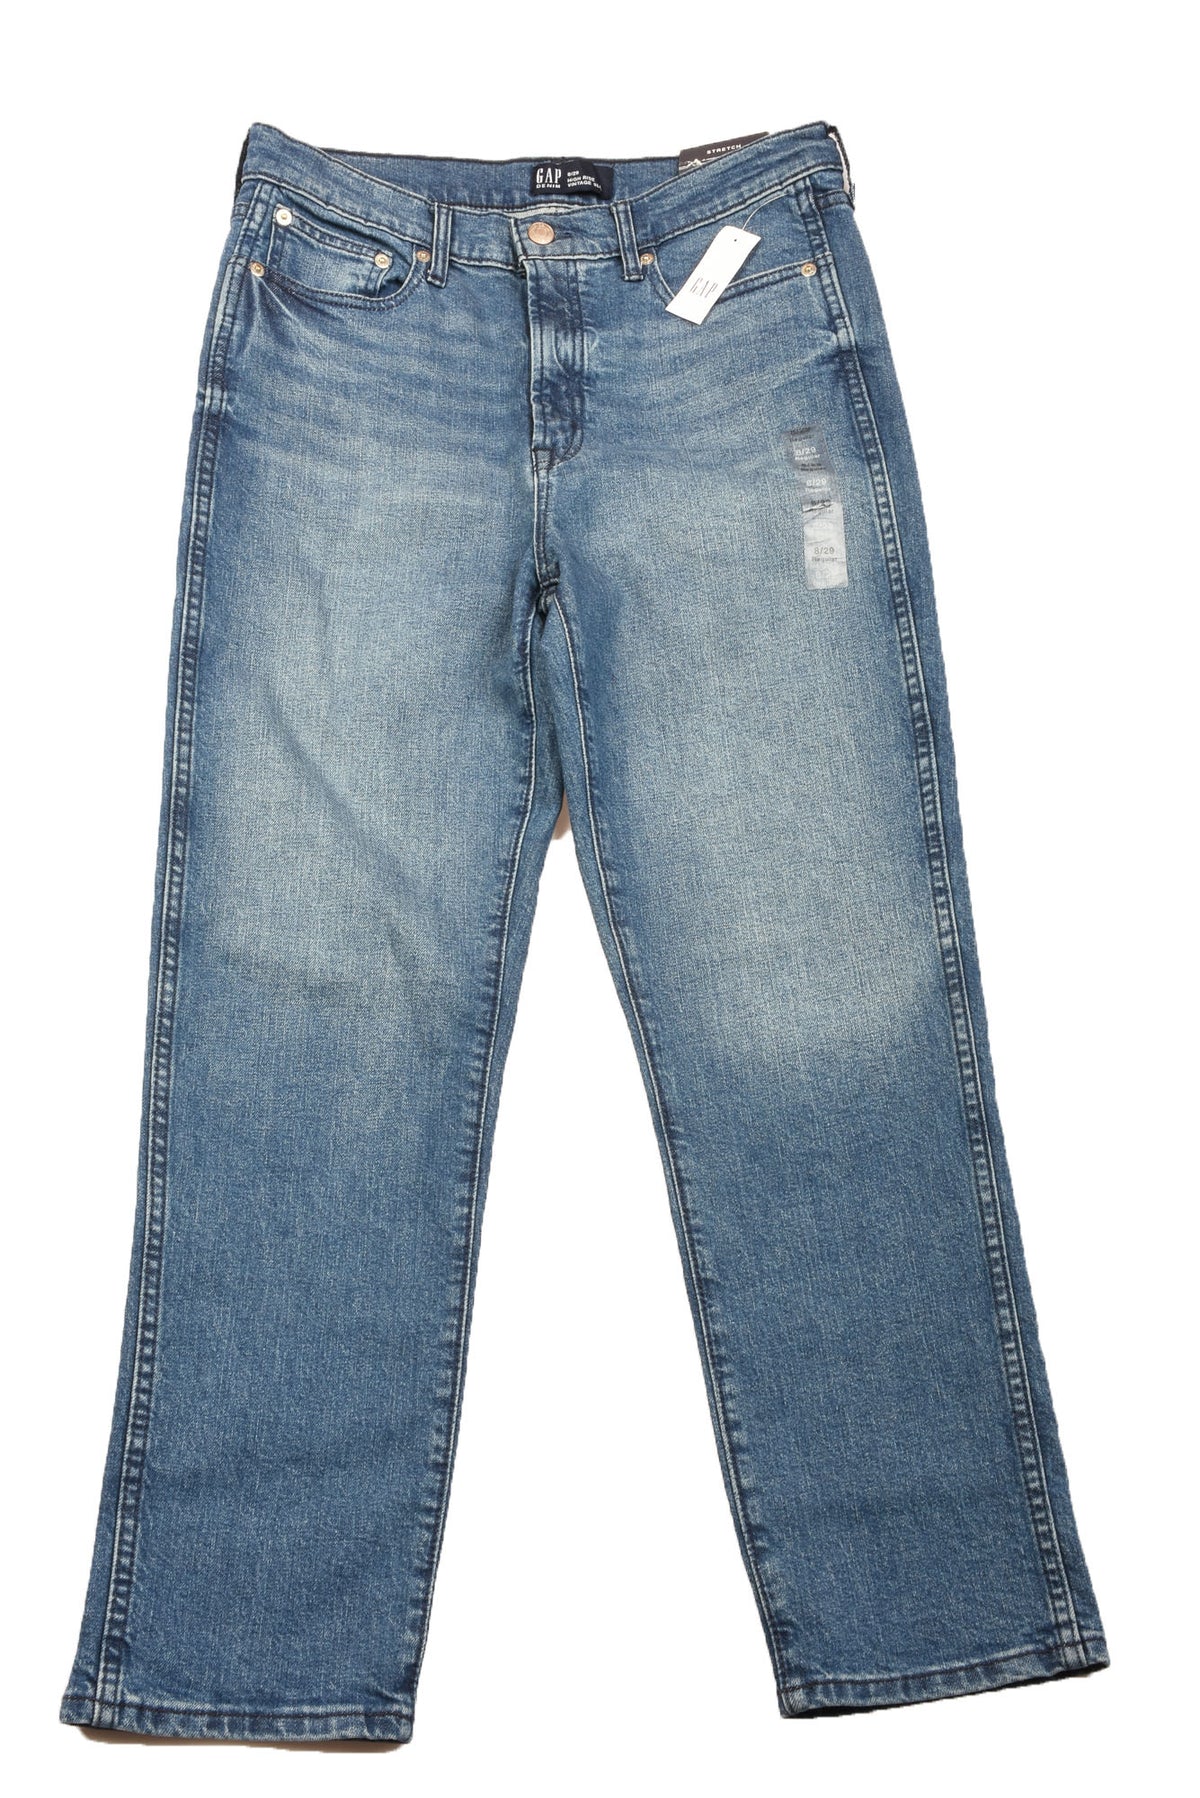 Gap Denim Size 8/29 Women&#39;s Jeans